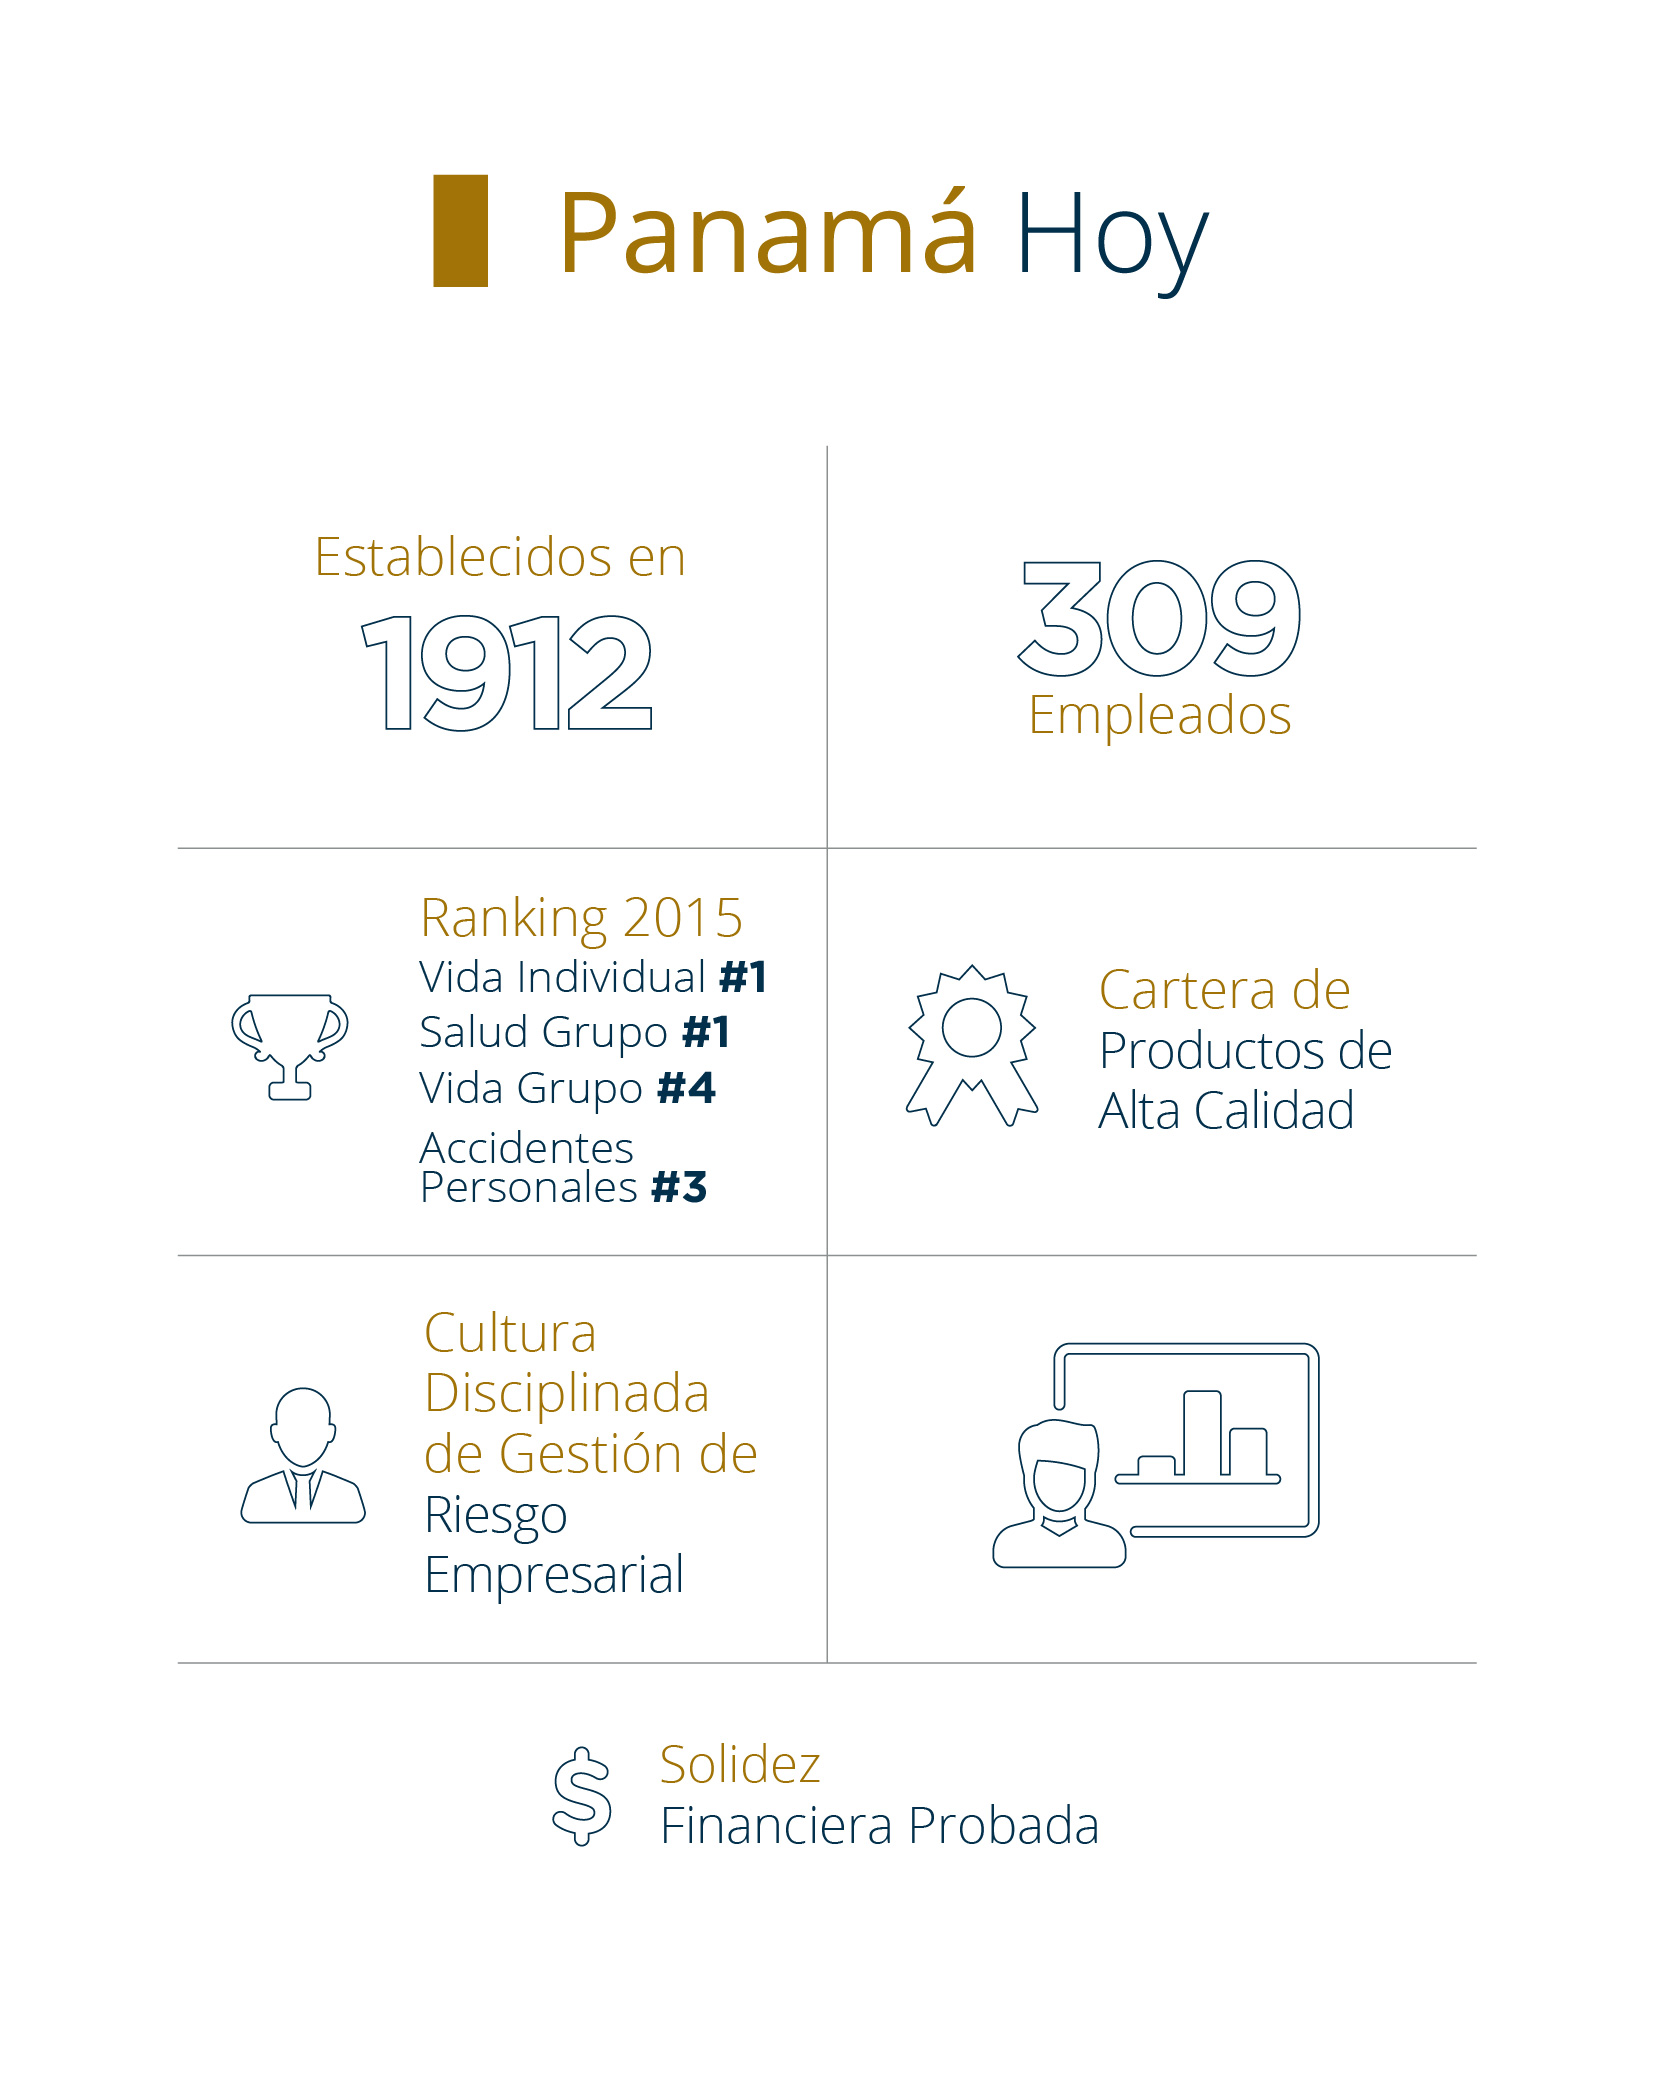 Sobre Pan-American Life Insurance Group de Panama